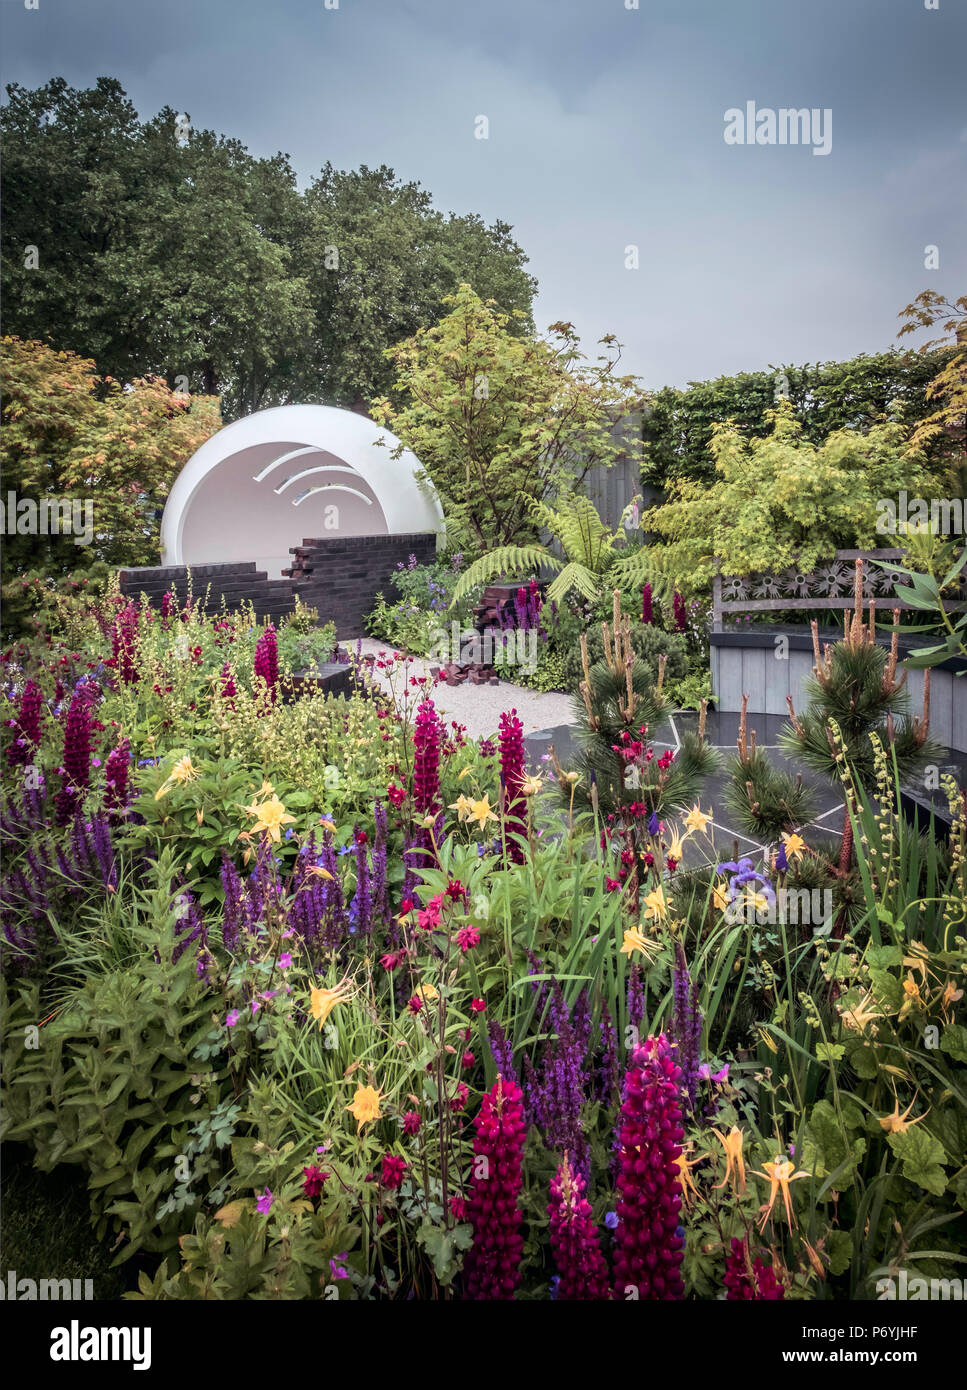 the cherub hiv garden at the chelsea flower show 2018, london, uk